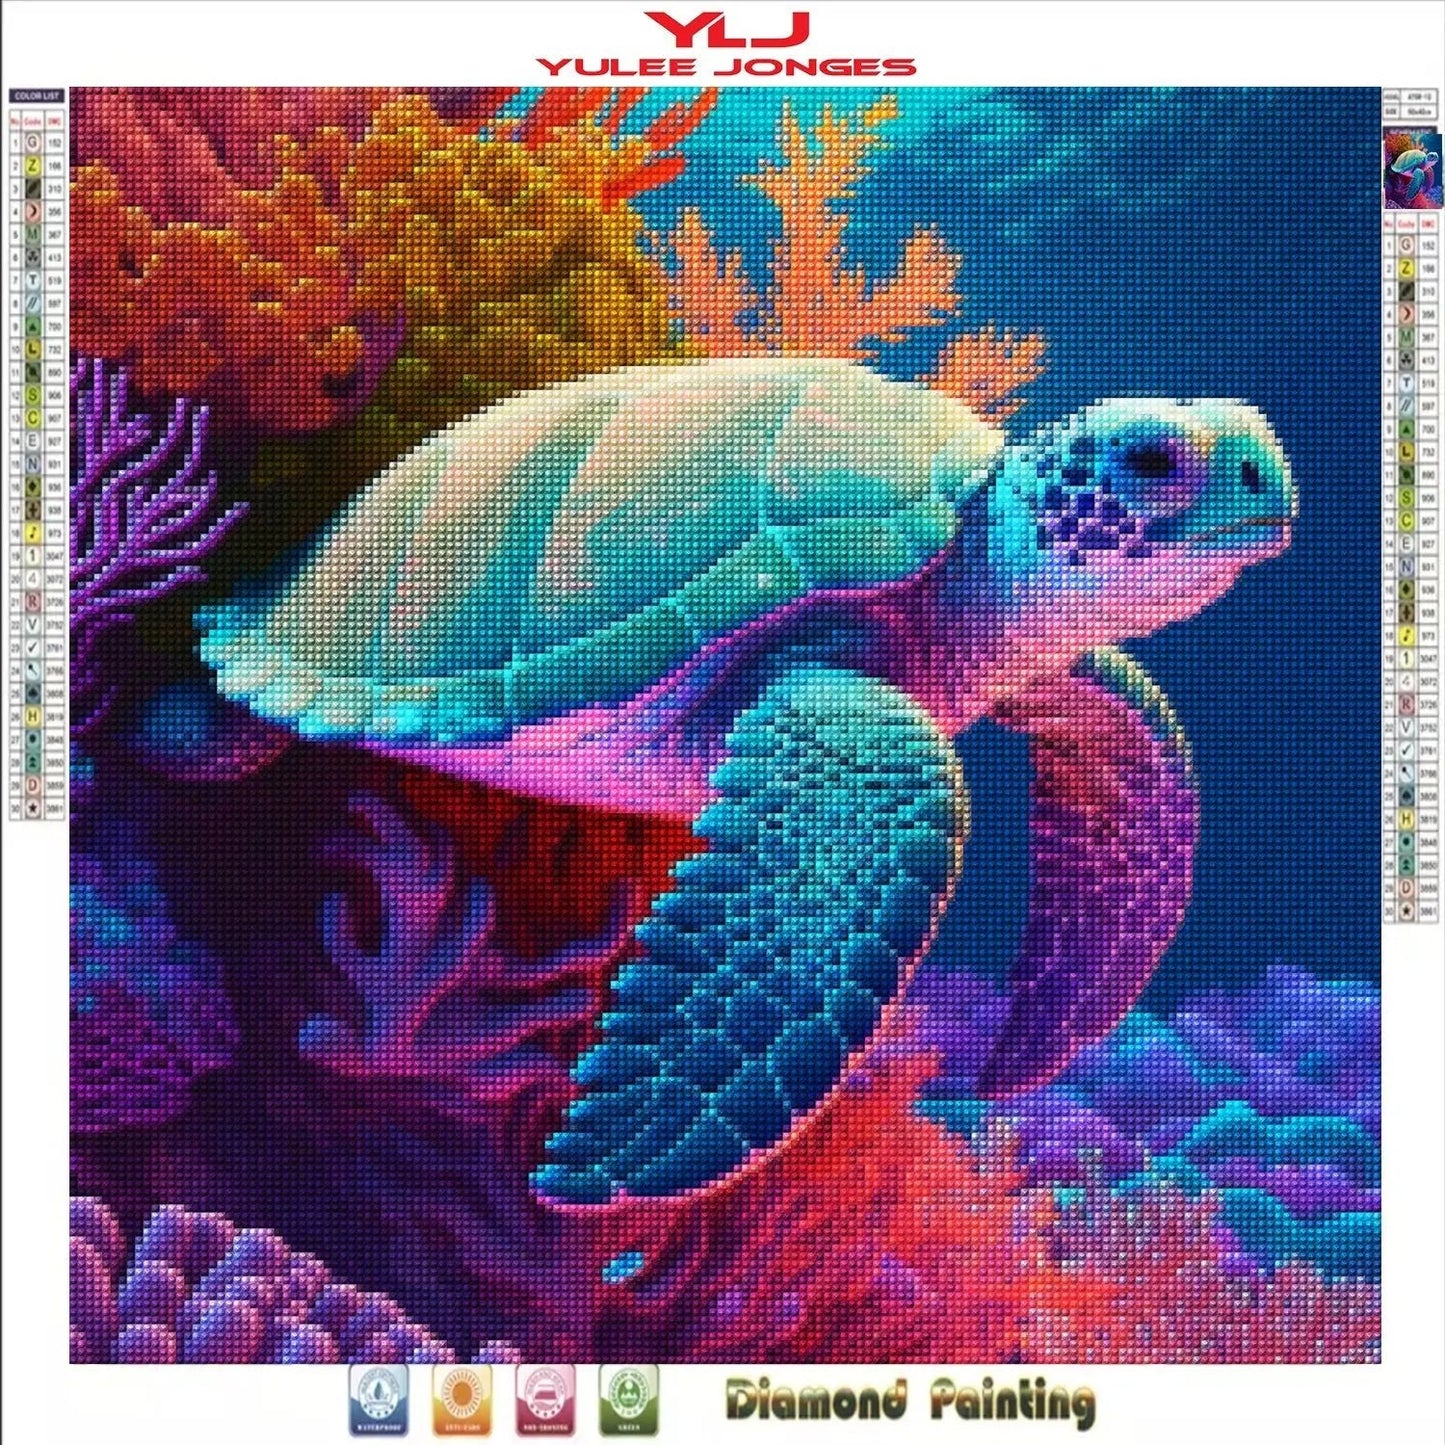 "Turtley Awesome" - Full Drill Diamond Painting Kit - YLJ Art Shop - YuLee Jonges